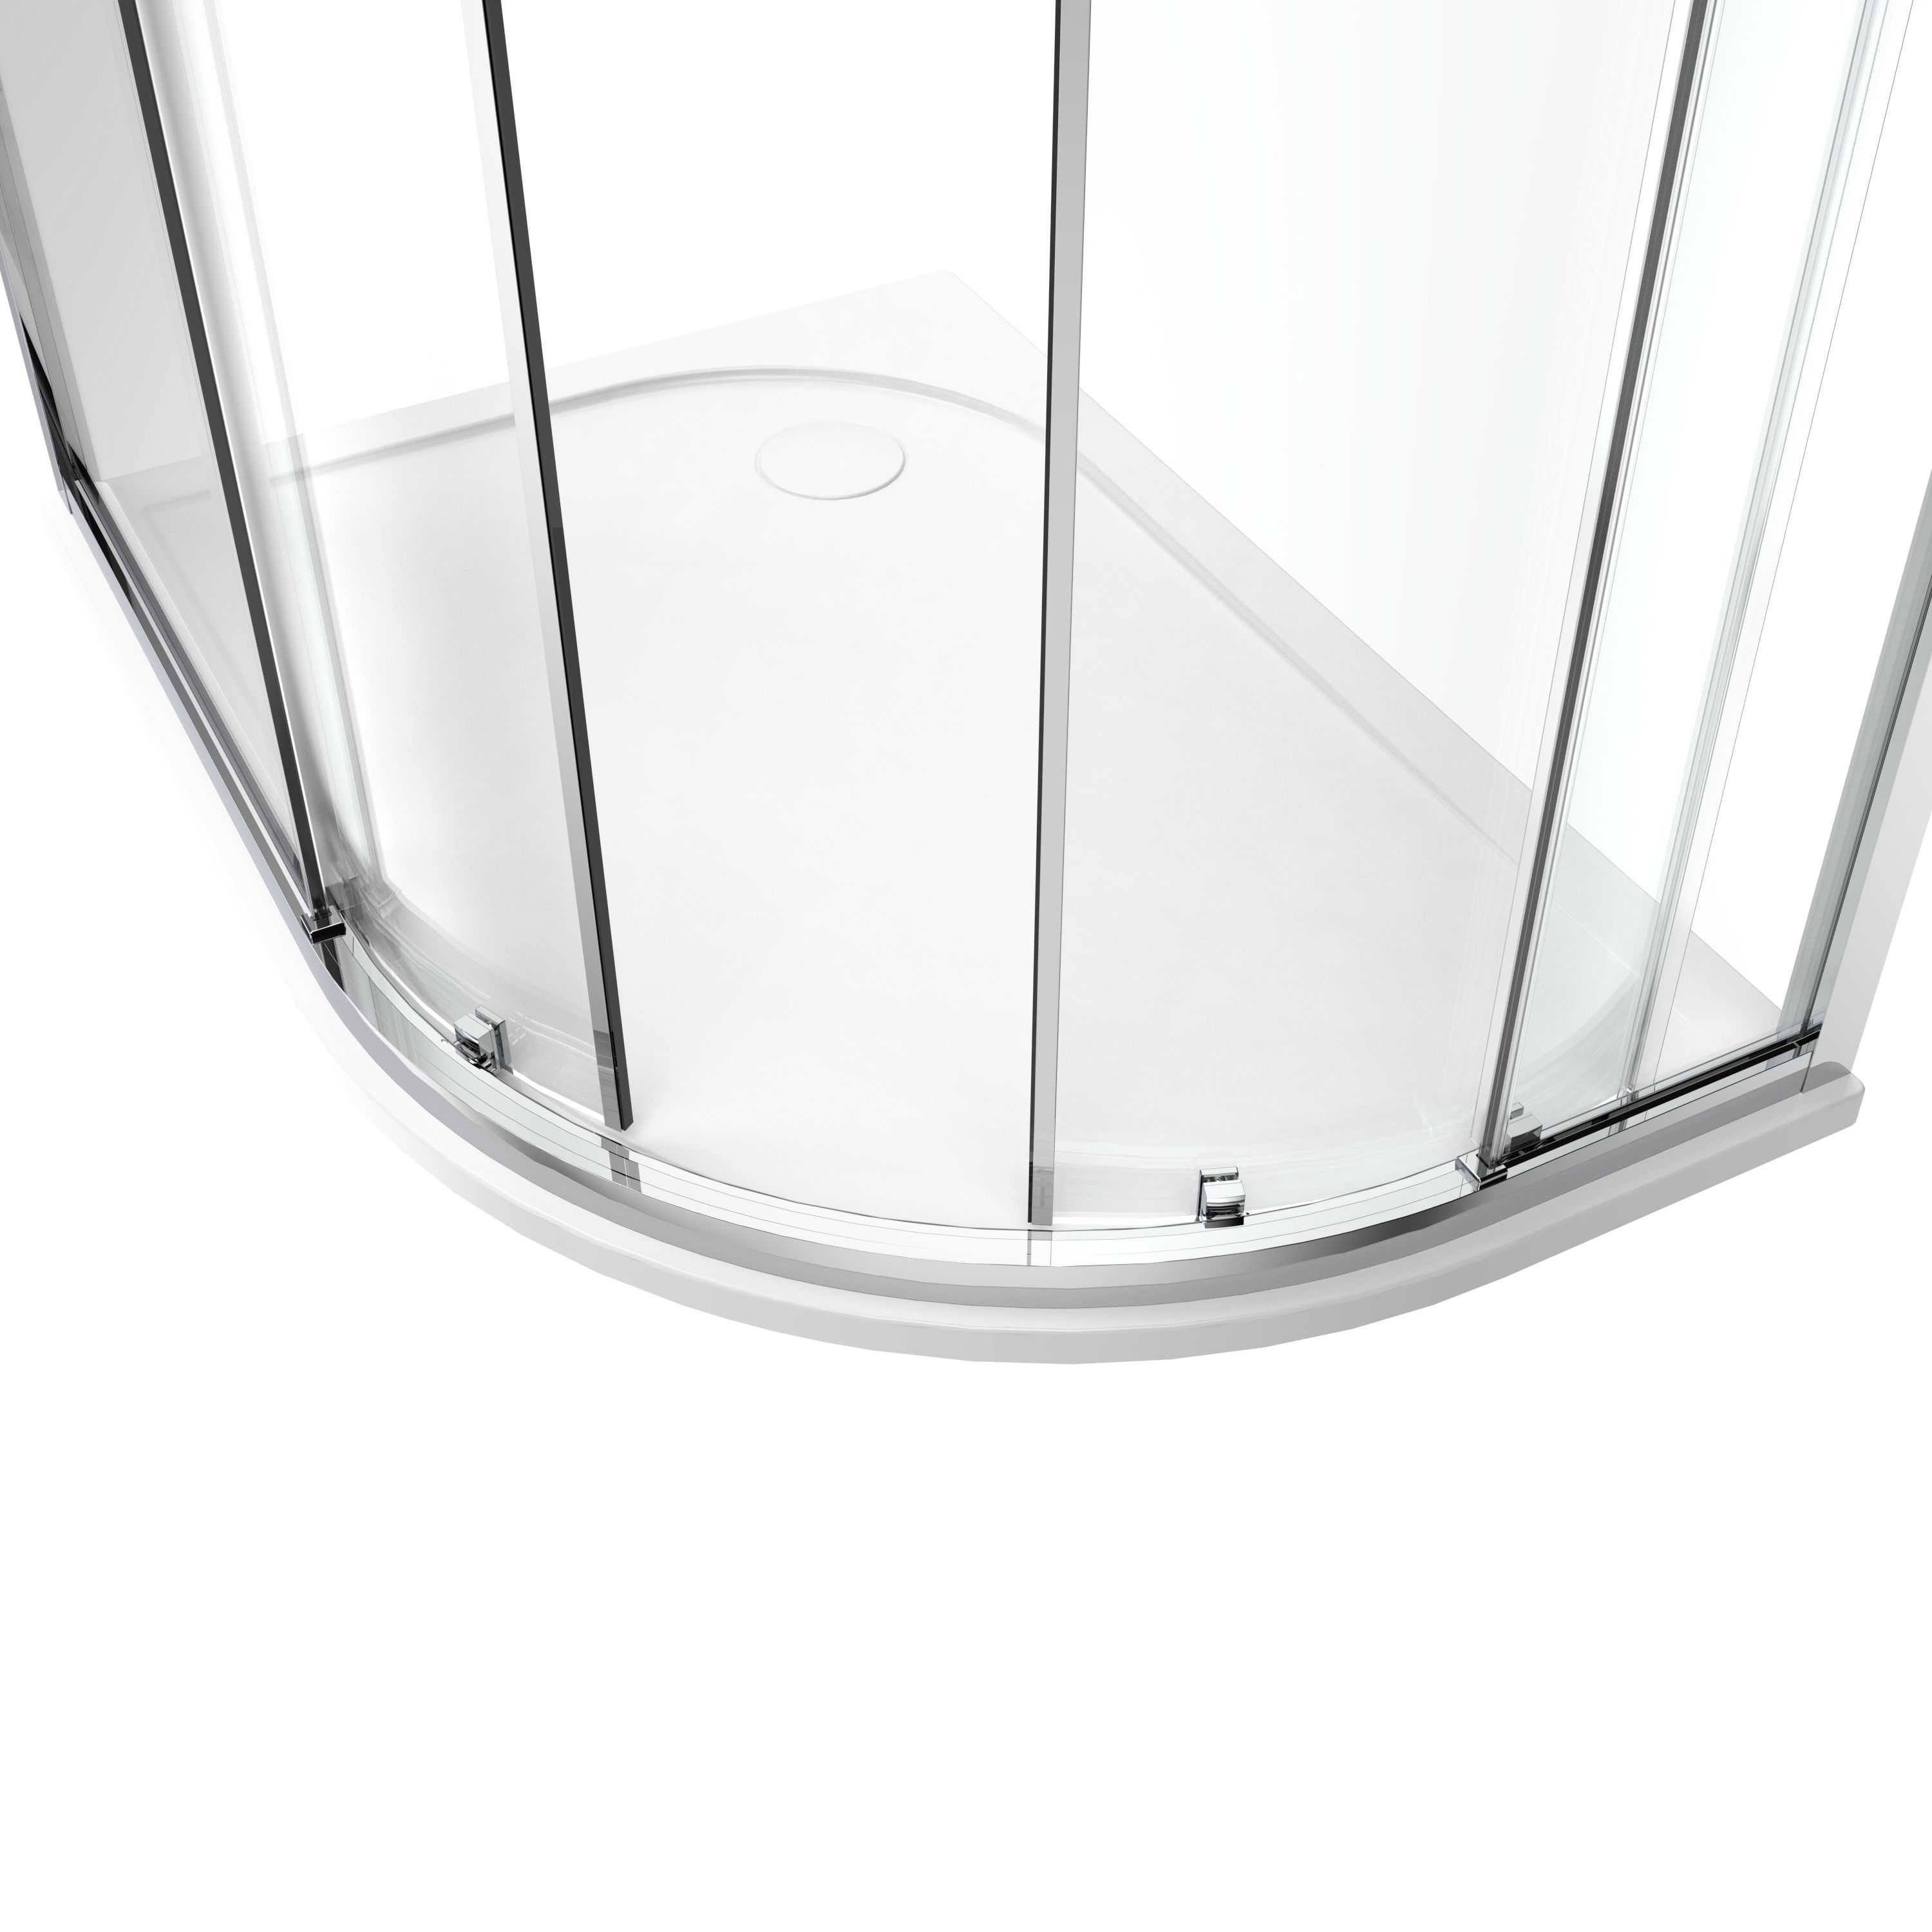 GoodHome Ledava Chrome effect Left-handed Offset quadrant Shower Enclosure & tray - Corner entry double sliding door (H)195cm (W)90cm (D)120cm